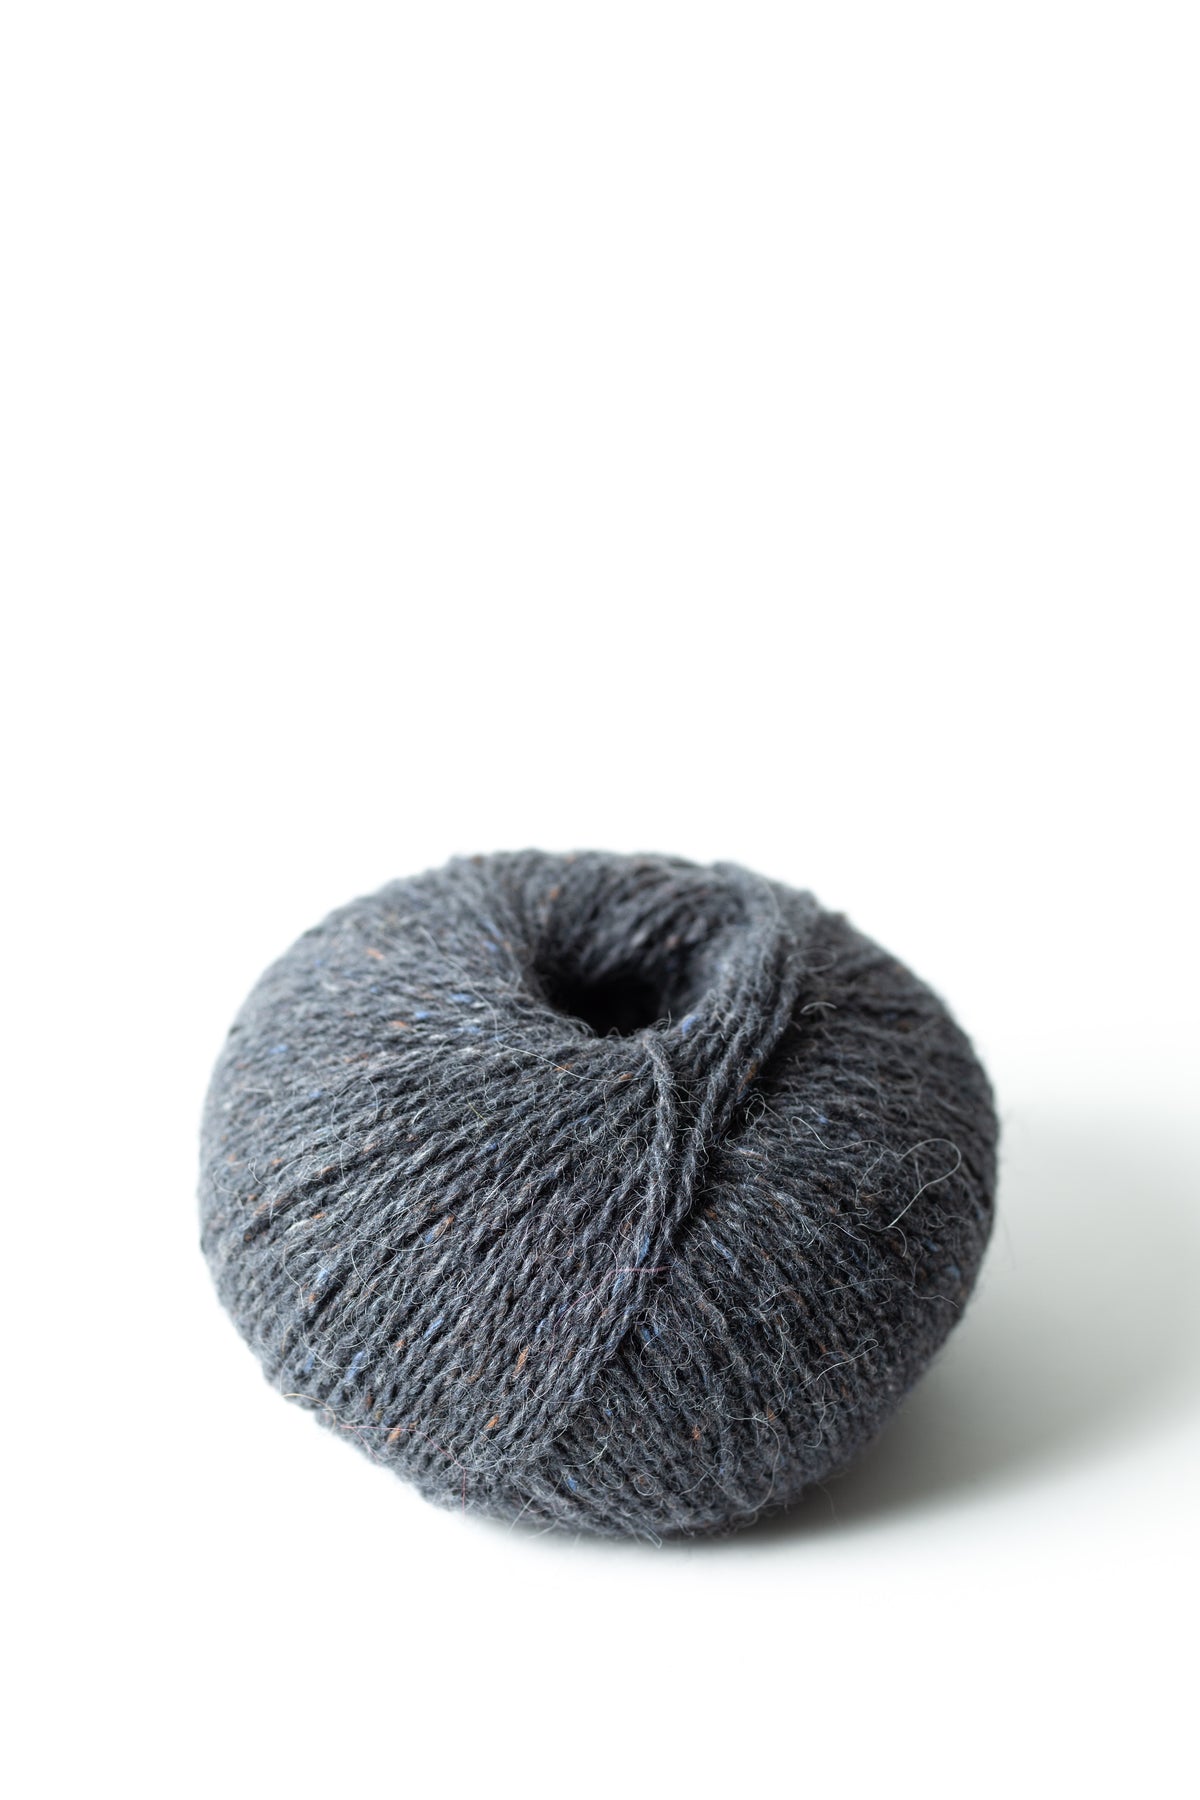 Felted Tweed Rowan  Shop Yarn Online Today - Beehive Wool Shop